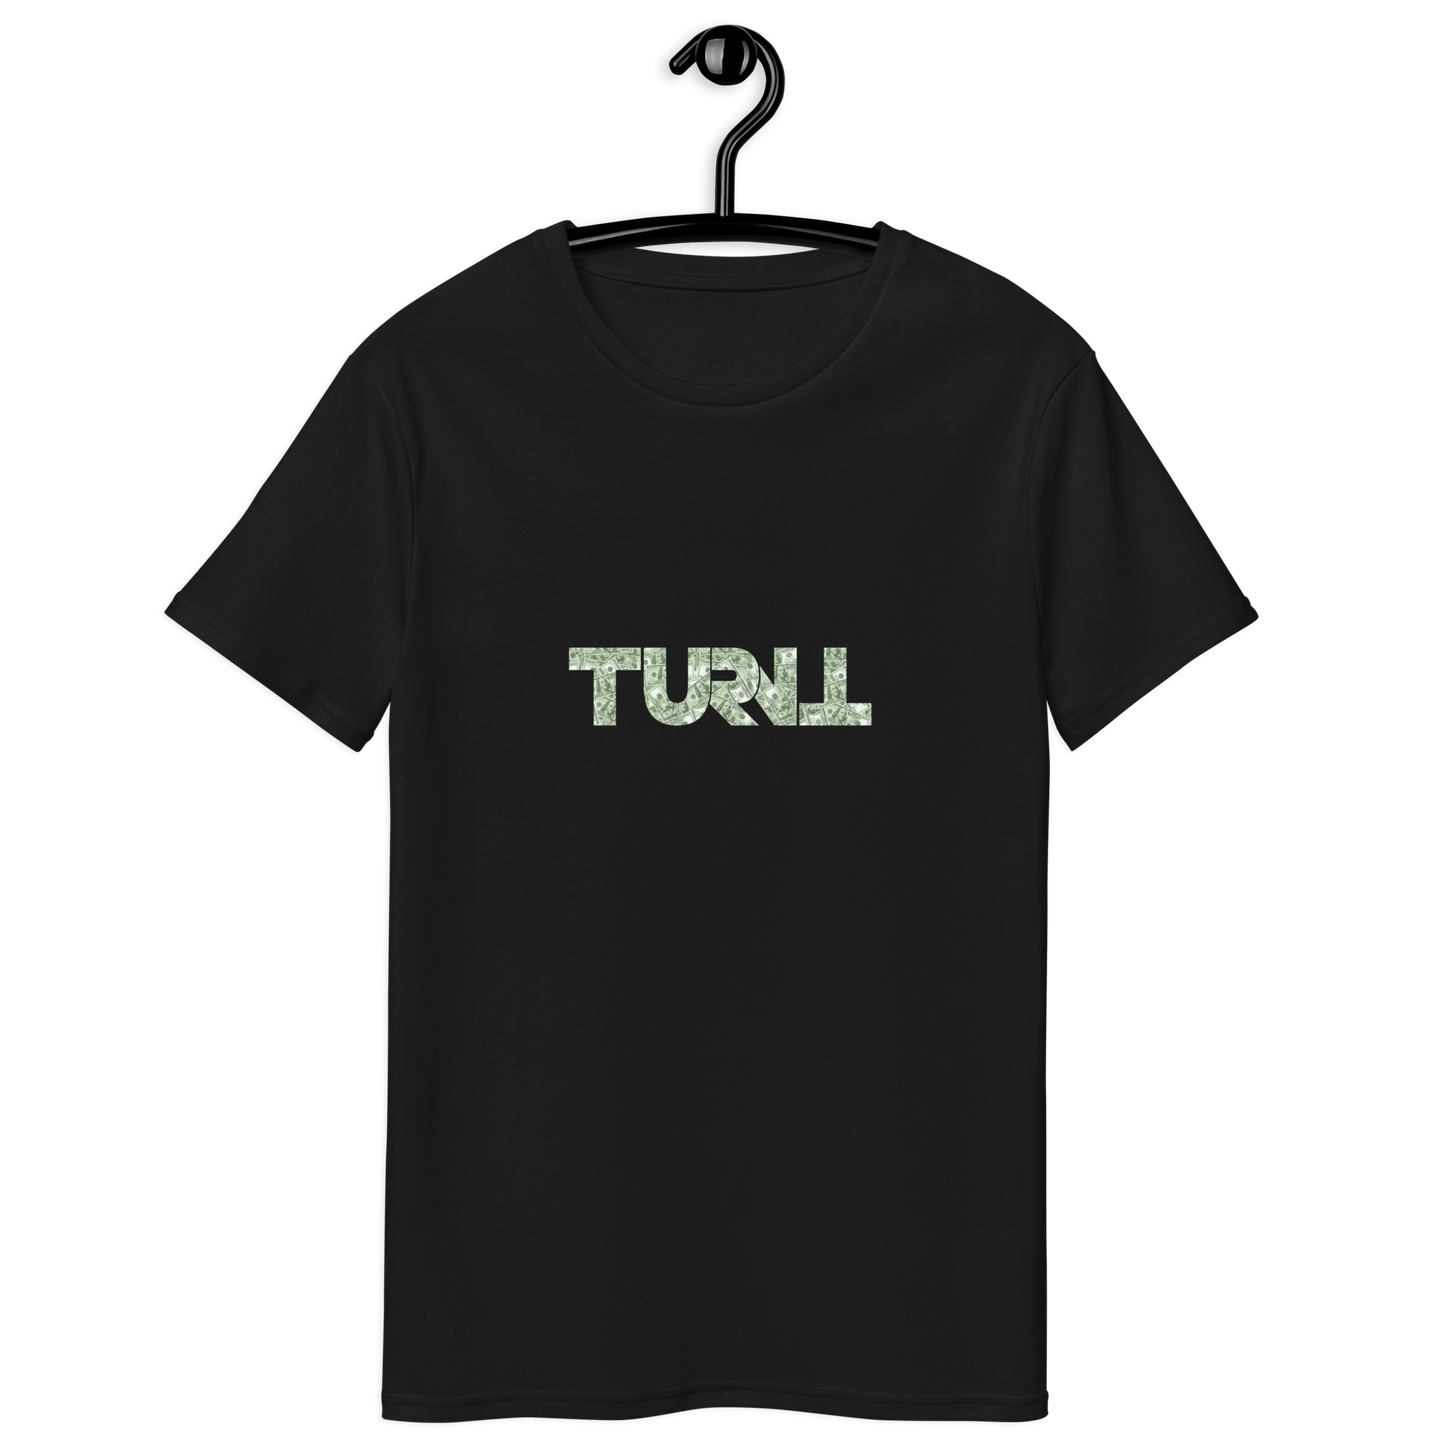 Turnt t-shirt (Money edition)